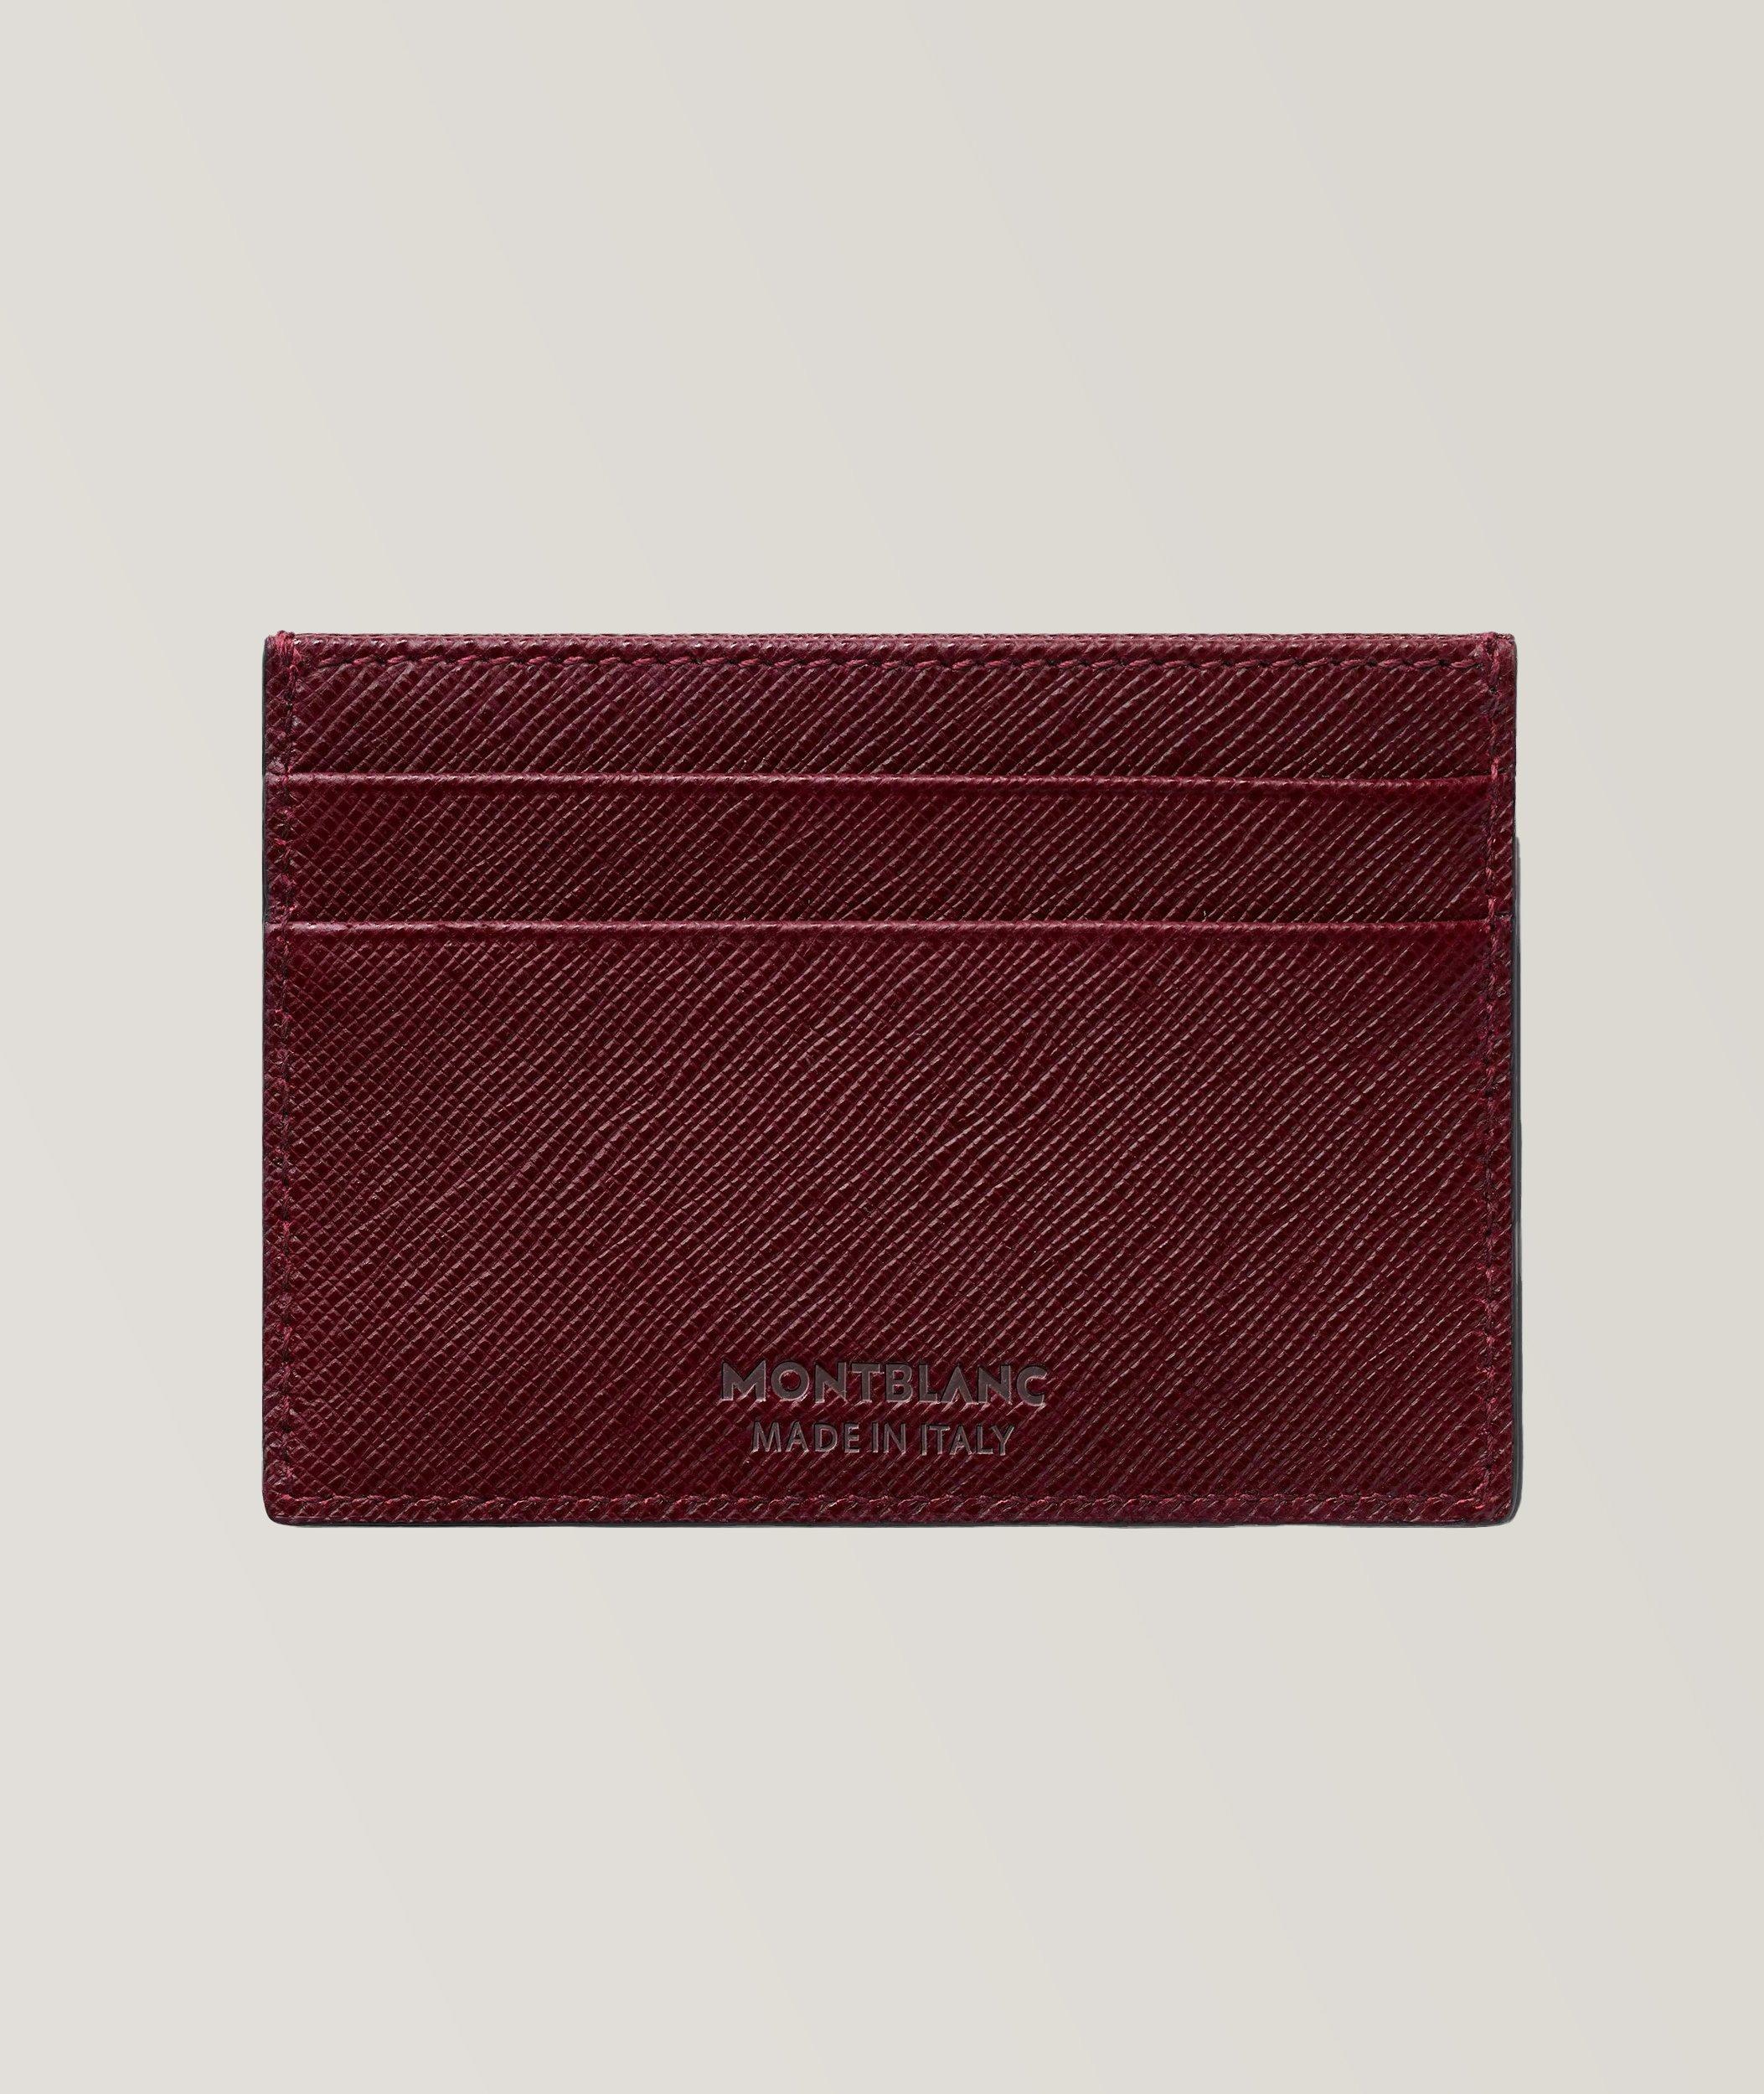 Sartorial Leather Card Holder image 1